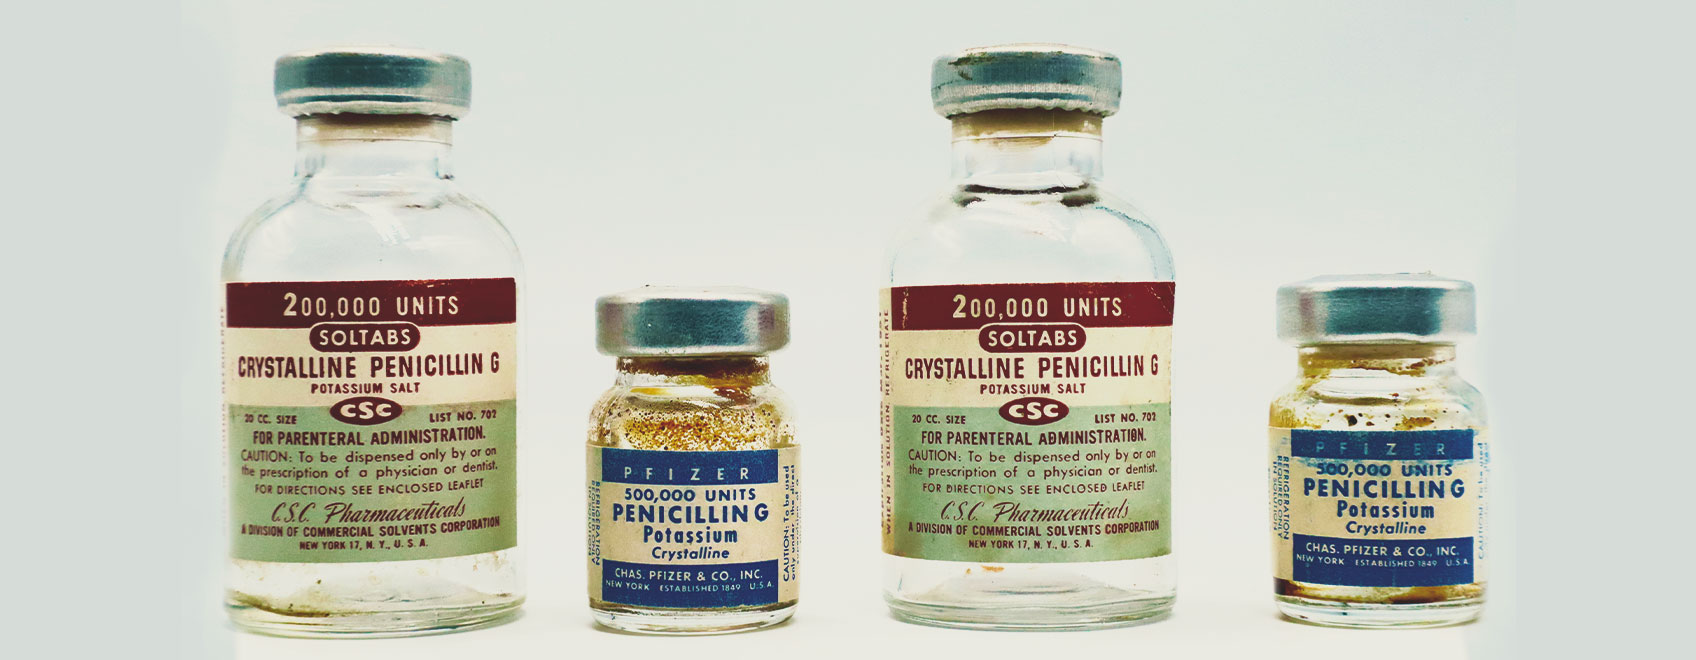 A Brief History of Antibiotics